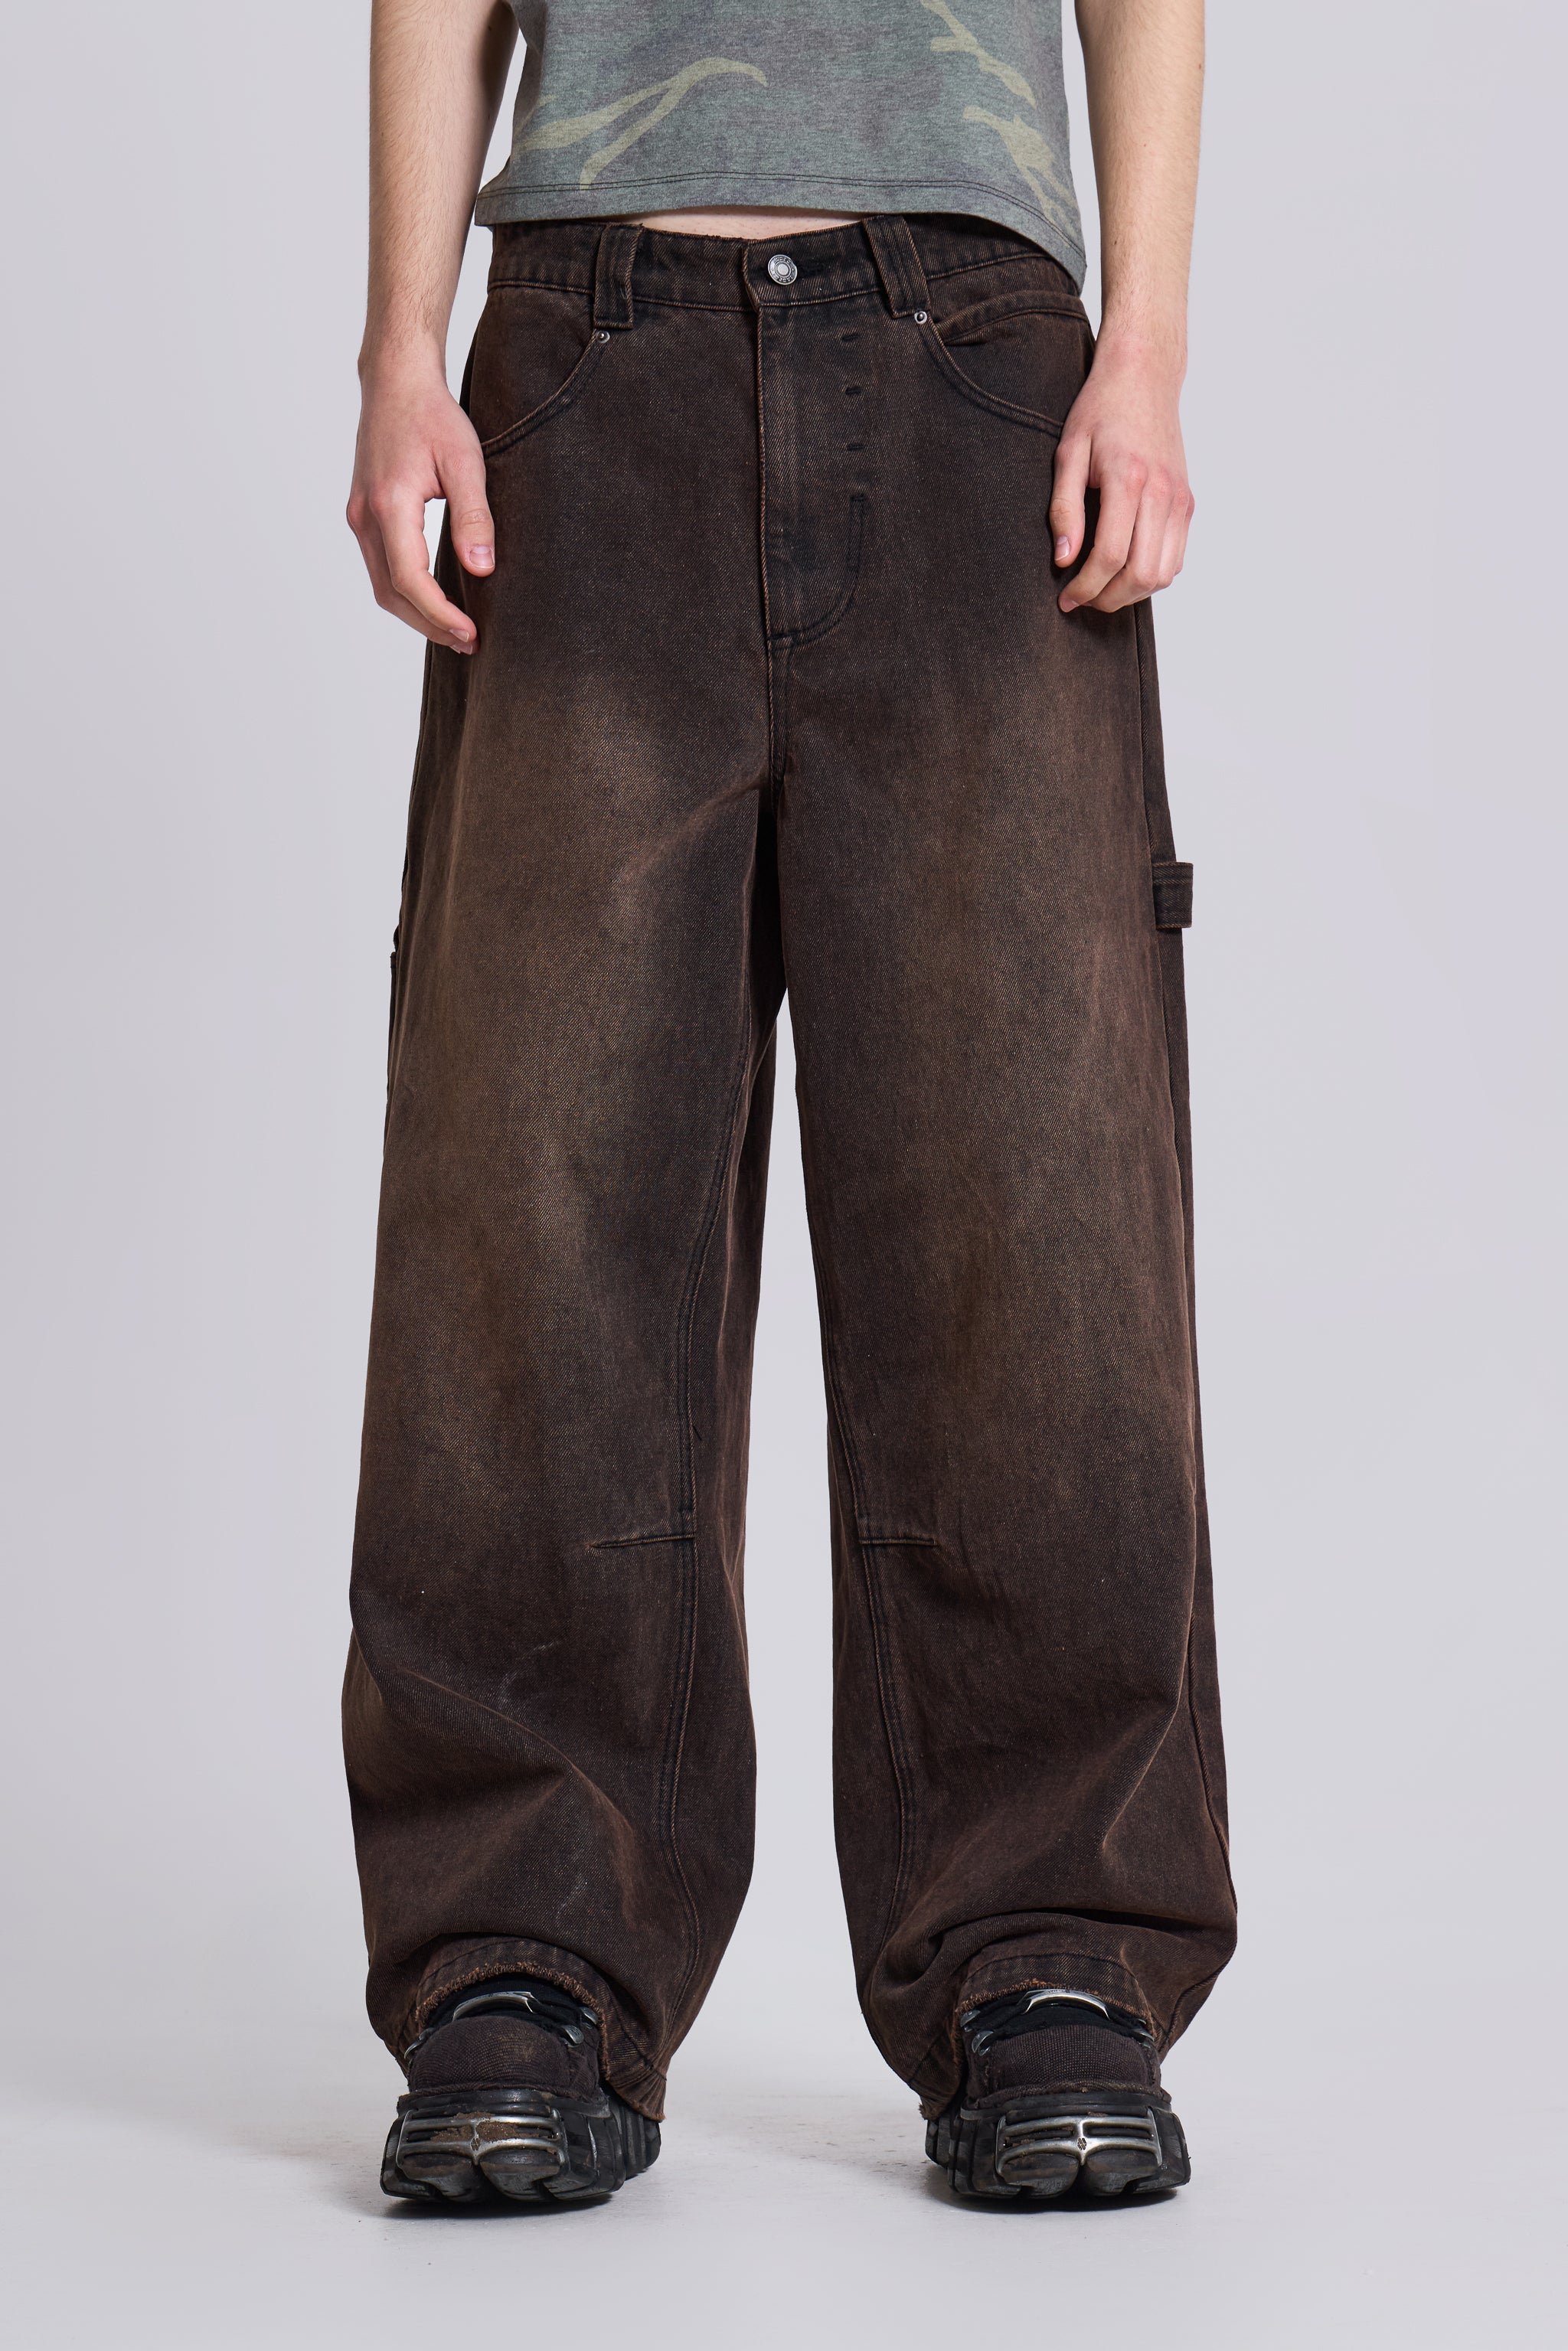 Brown Colossus Carpenter Jeans